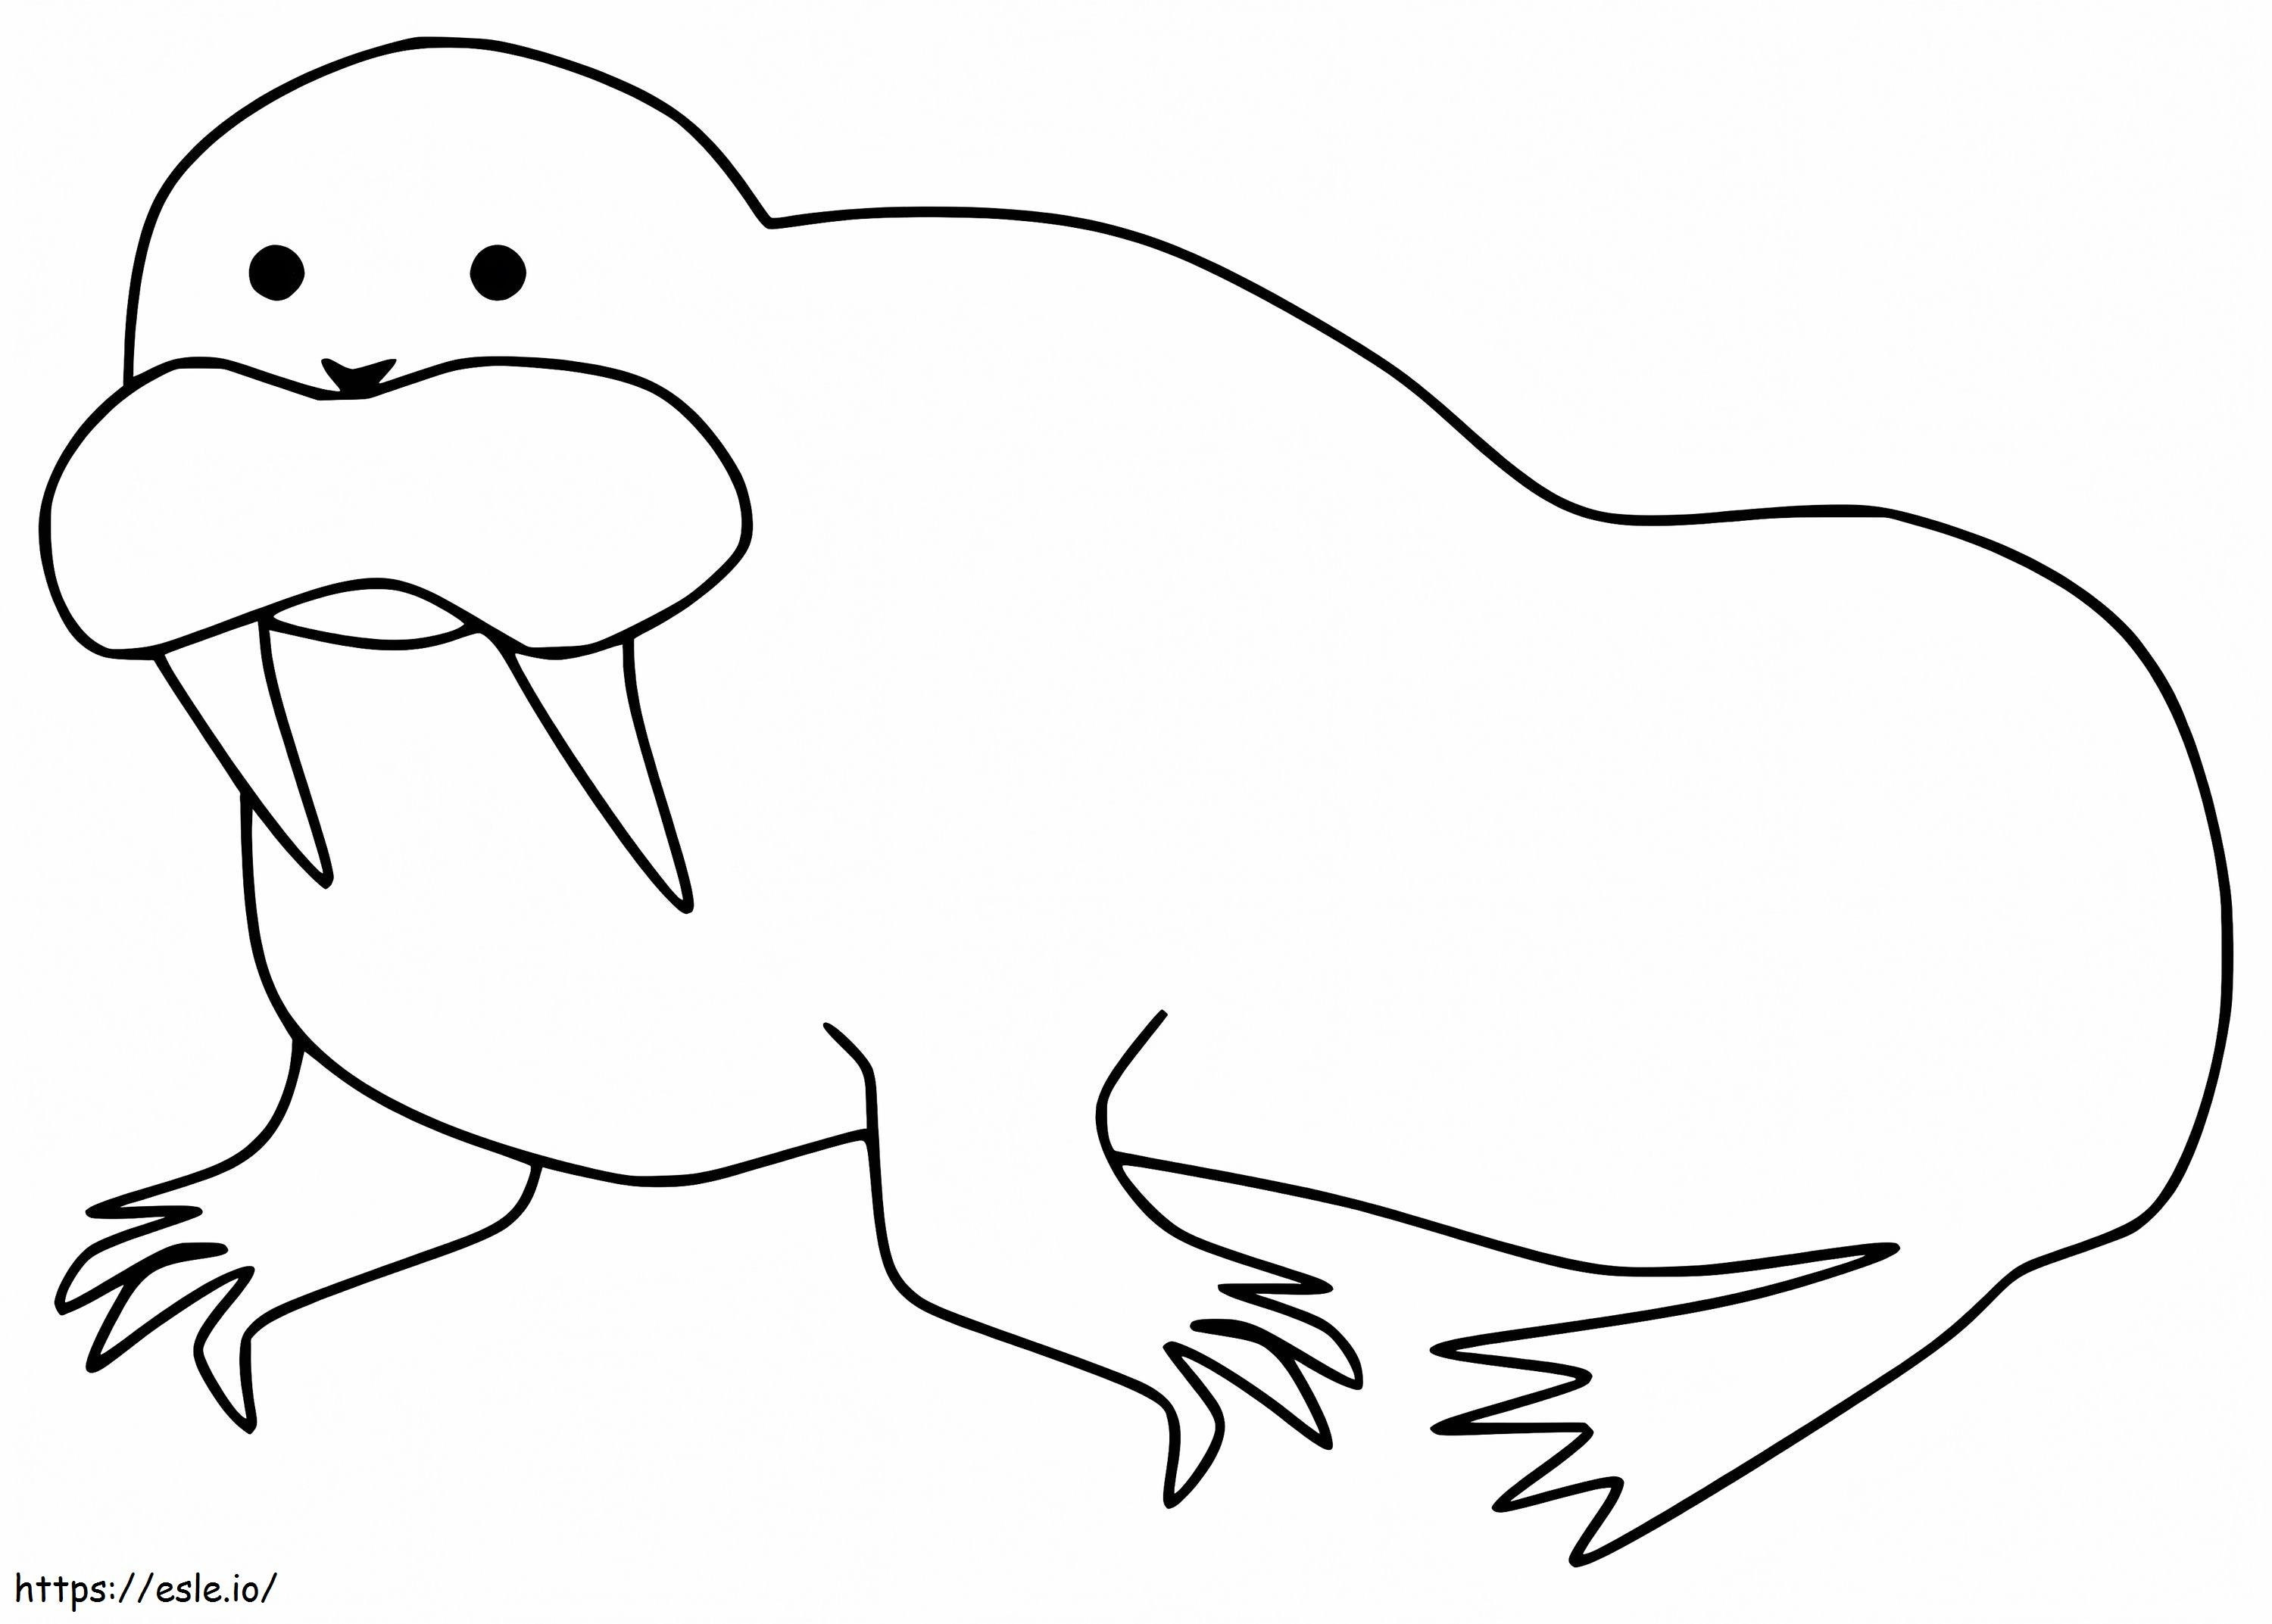 Printable Walrus coloring page